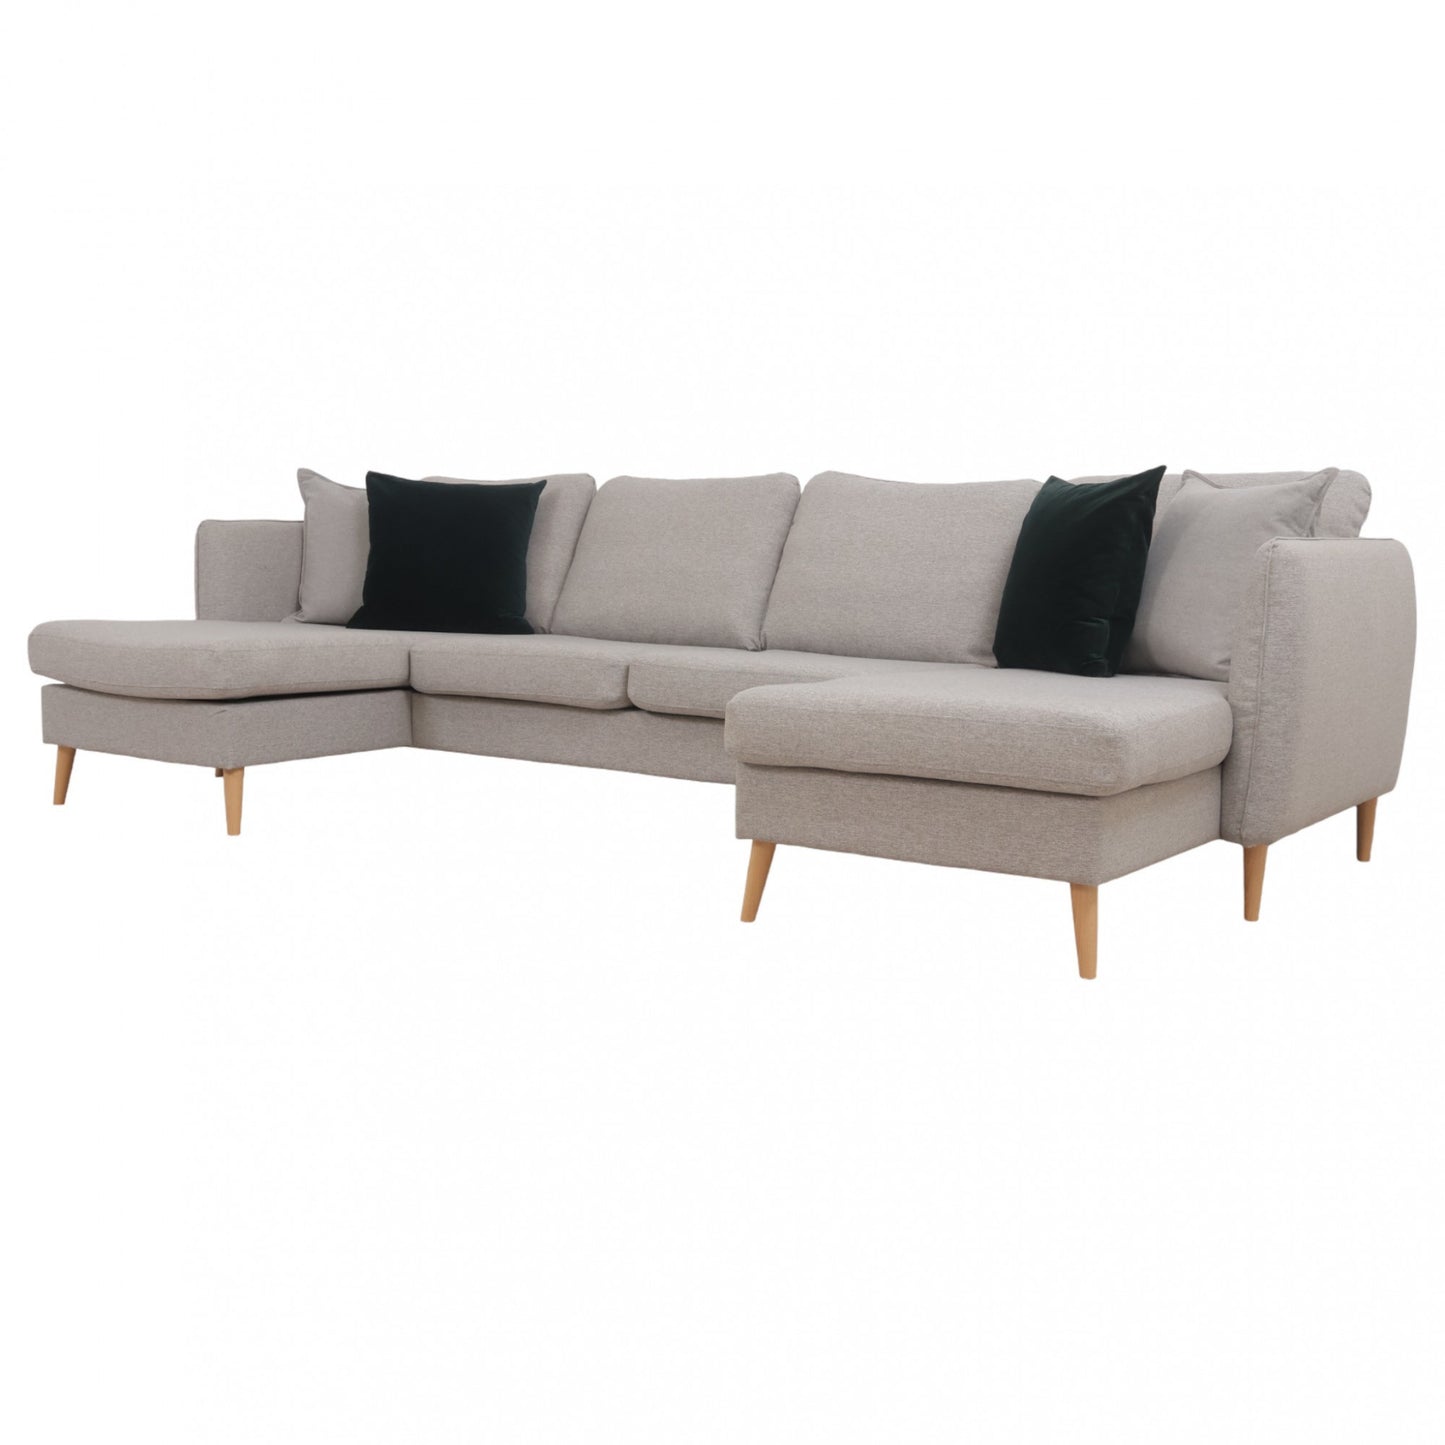 Nyrenset | Lys grå Jysk Aarhus u-sofa med 2 stk sjeselonger